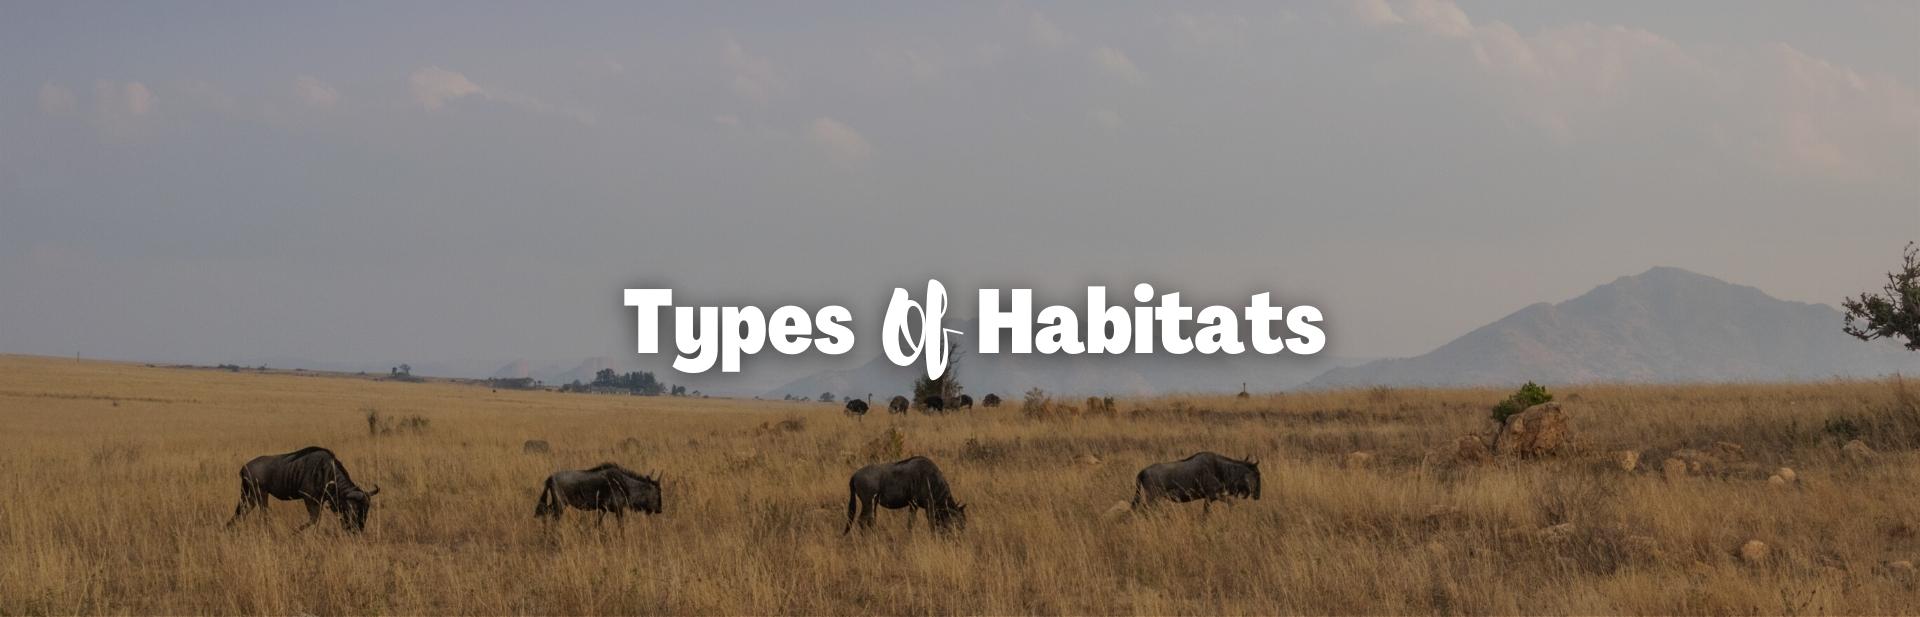 10 Types of Habitats Around The World that Animals & Plants Call Home